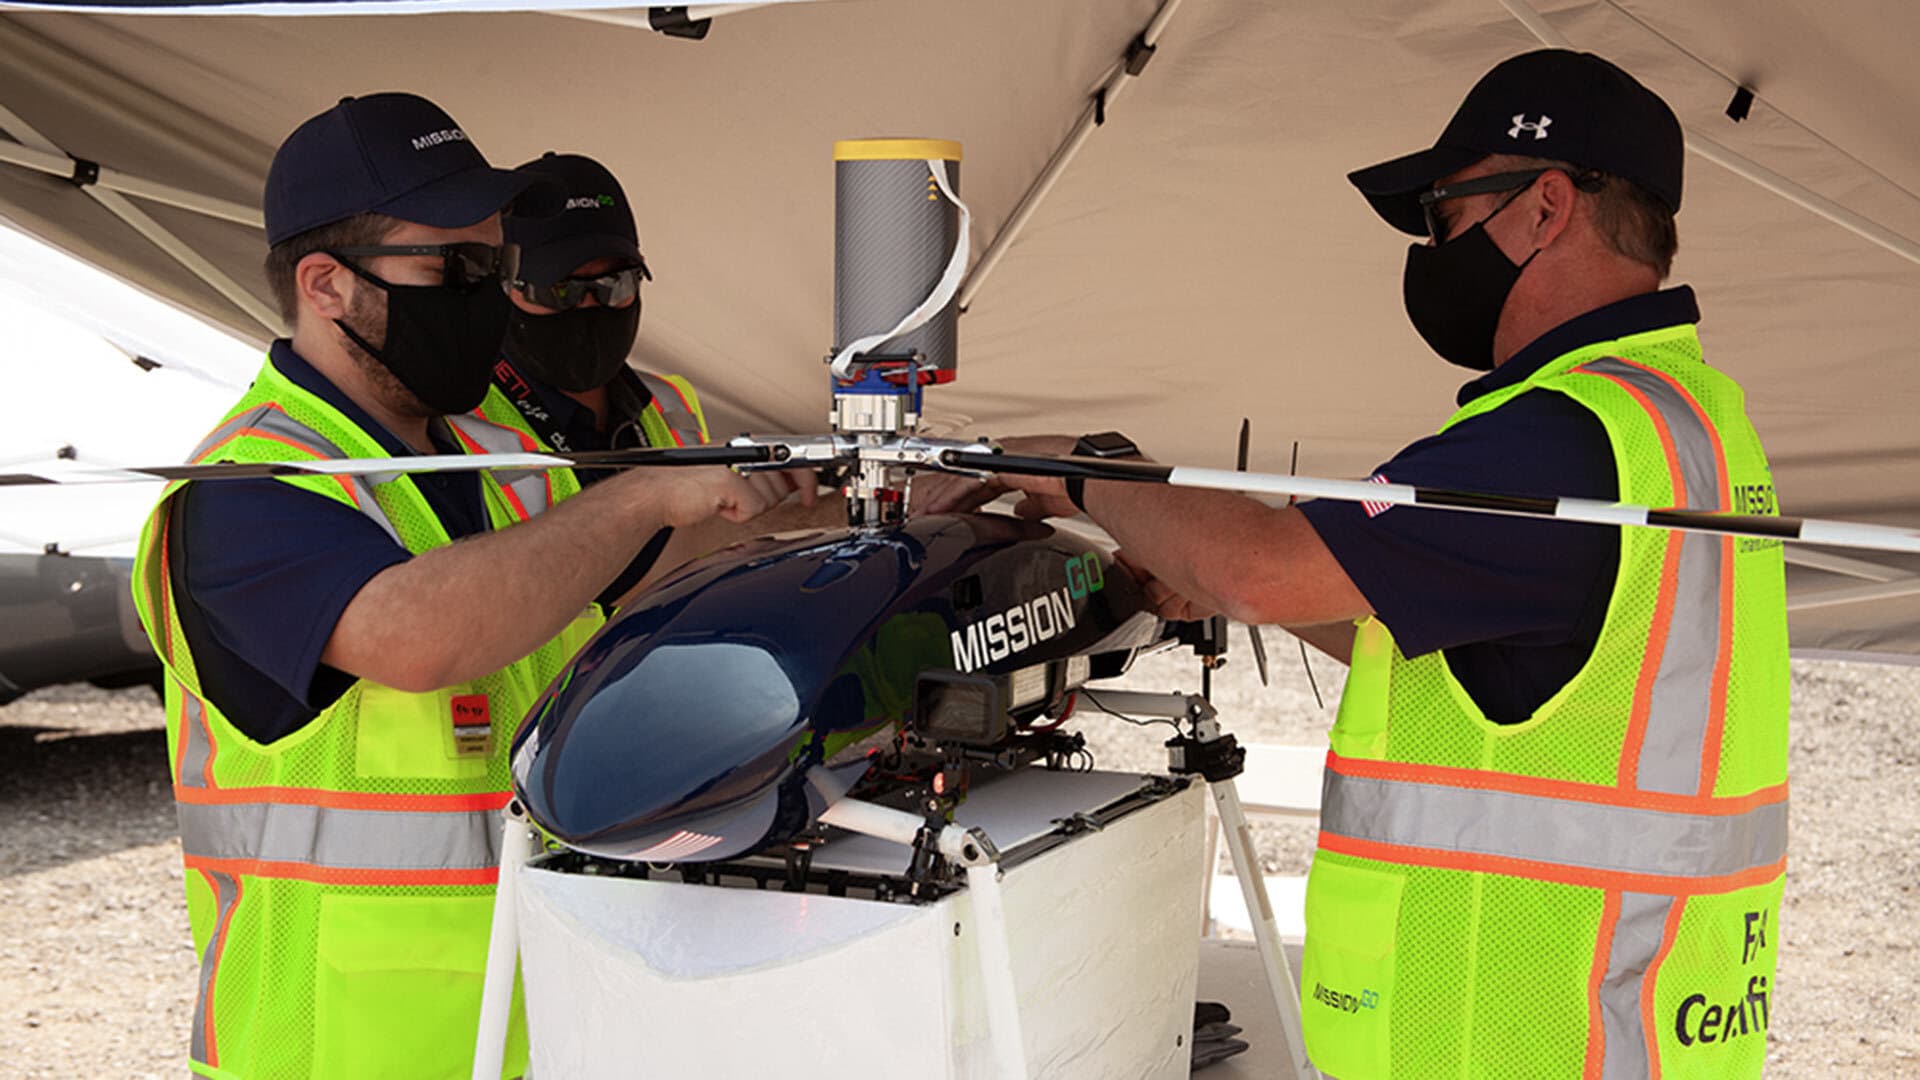 Workers prepare drone for tests in Las Vegas